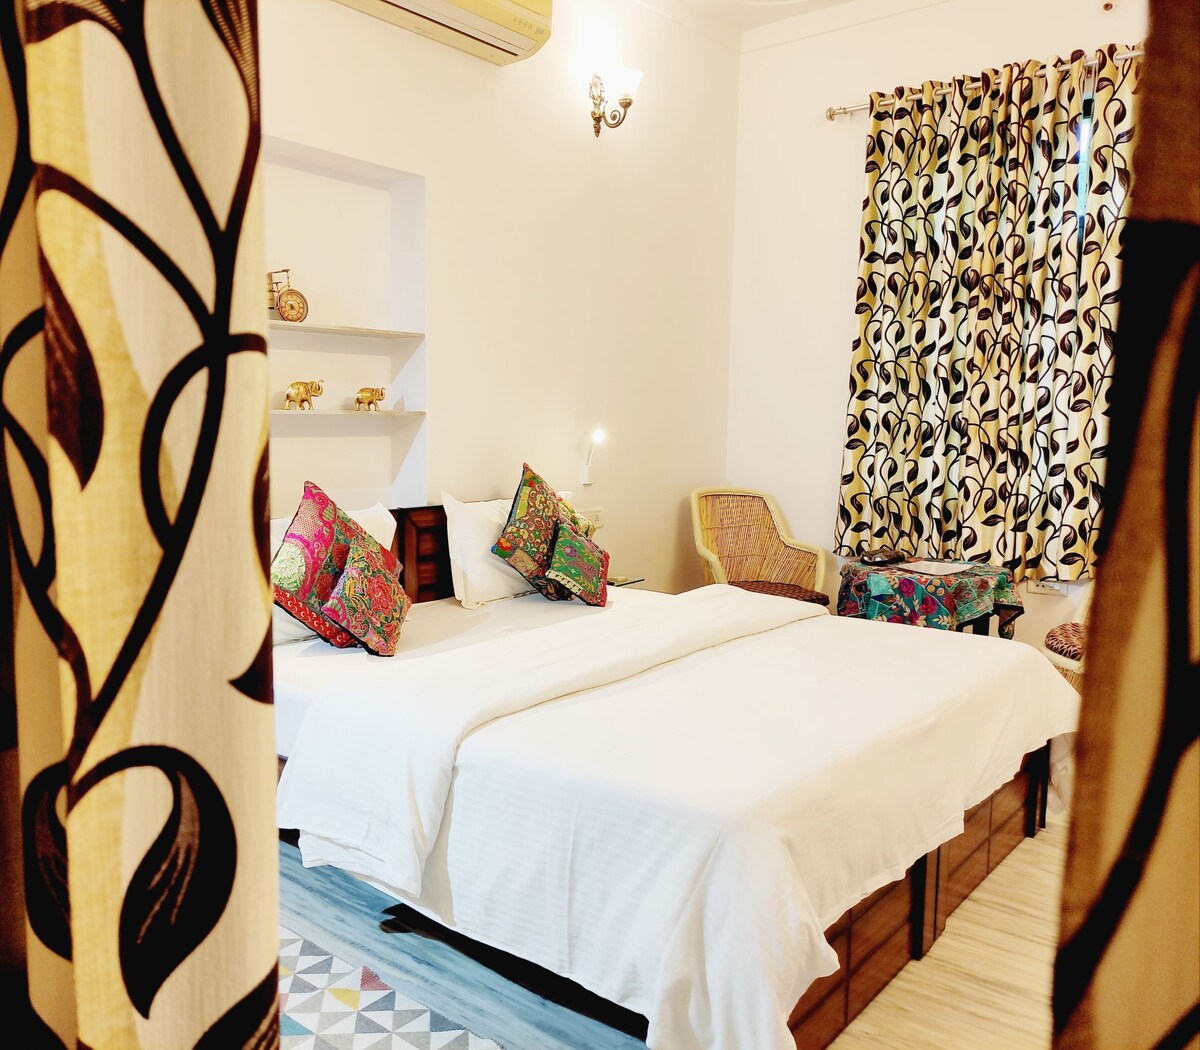 Prakash Ji's Homestay.
2 Bedroom luxurious Villa.